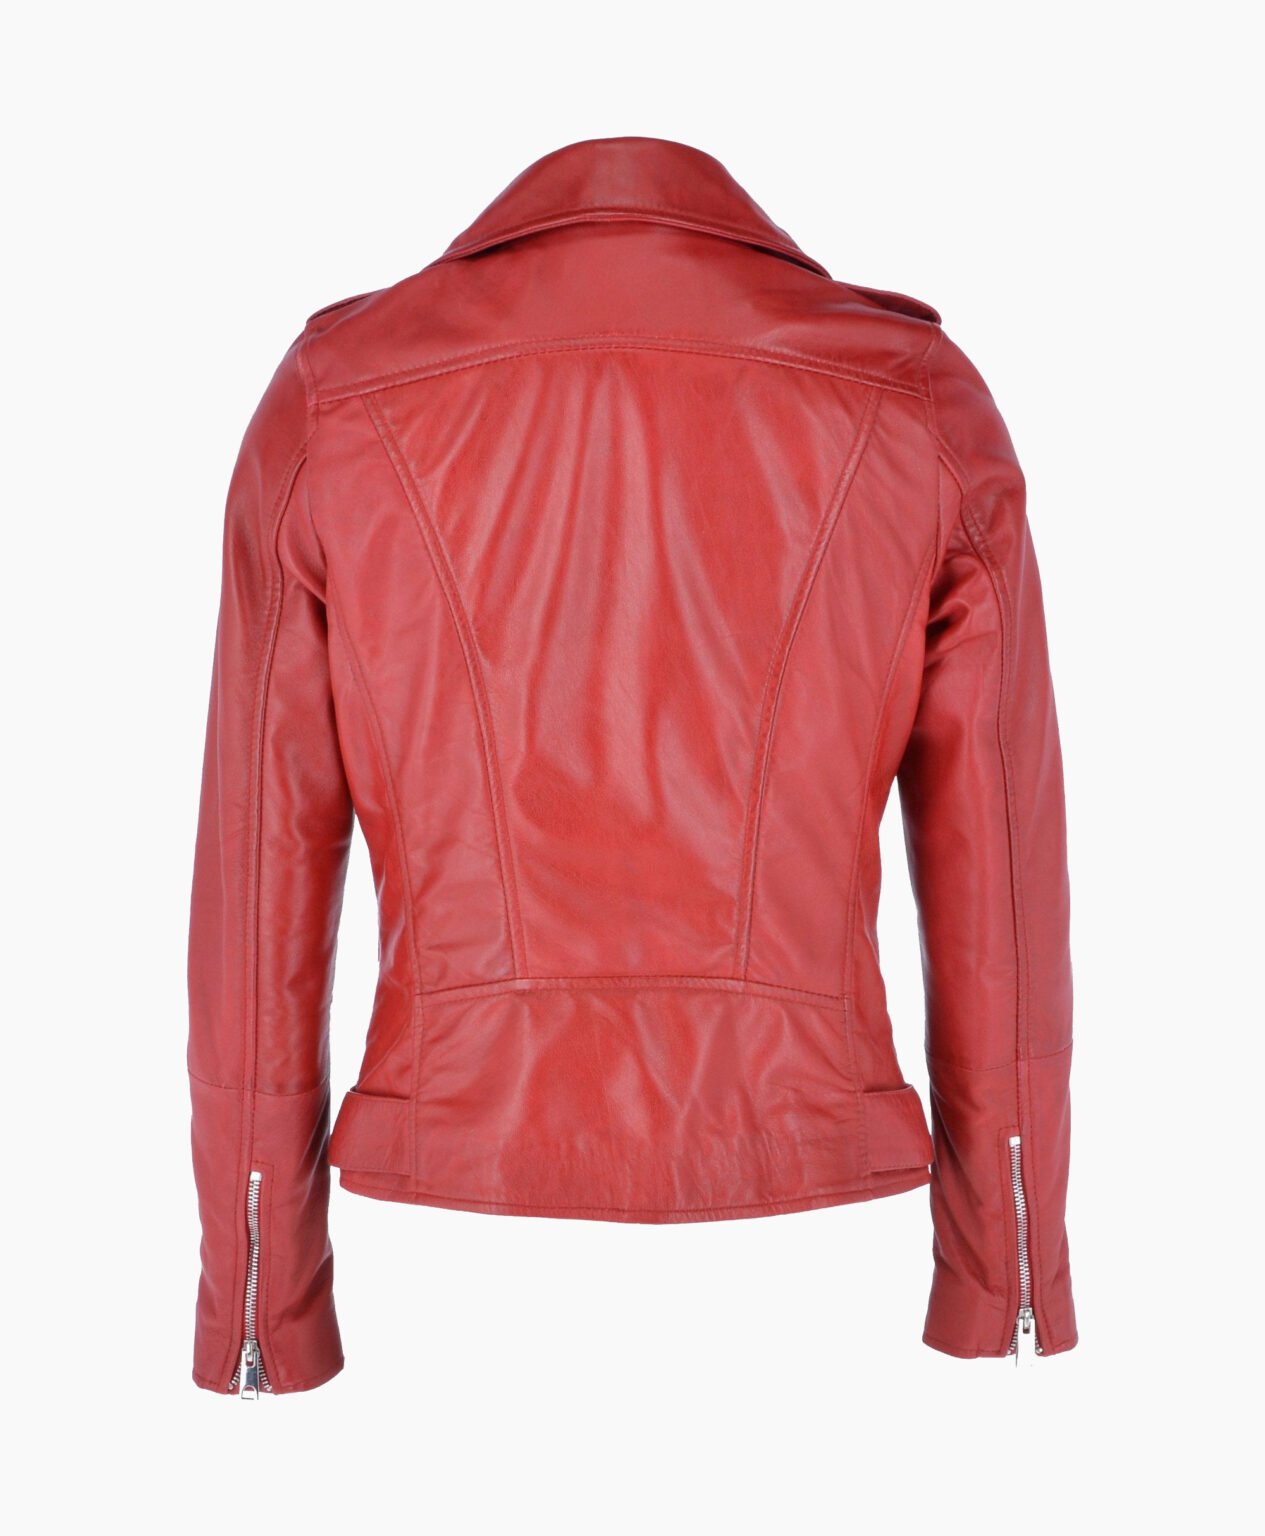 vogue-jacket-leather-biker-jacket-red-ruston-image202